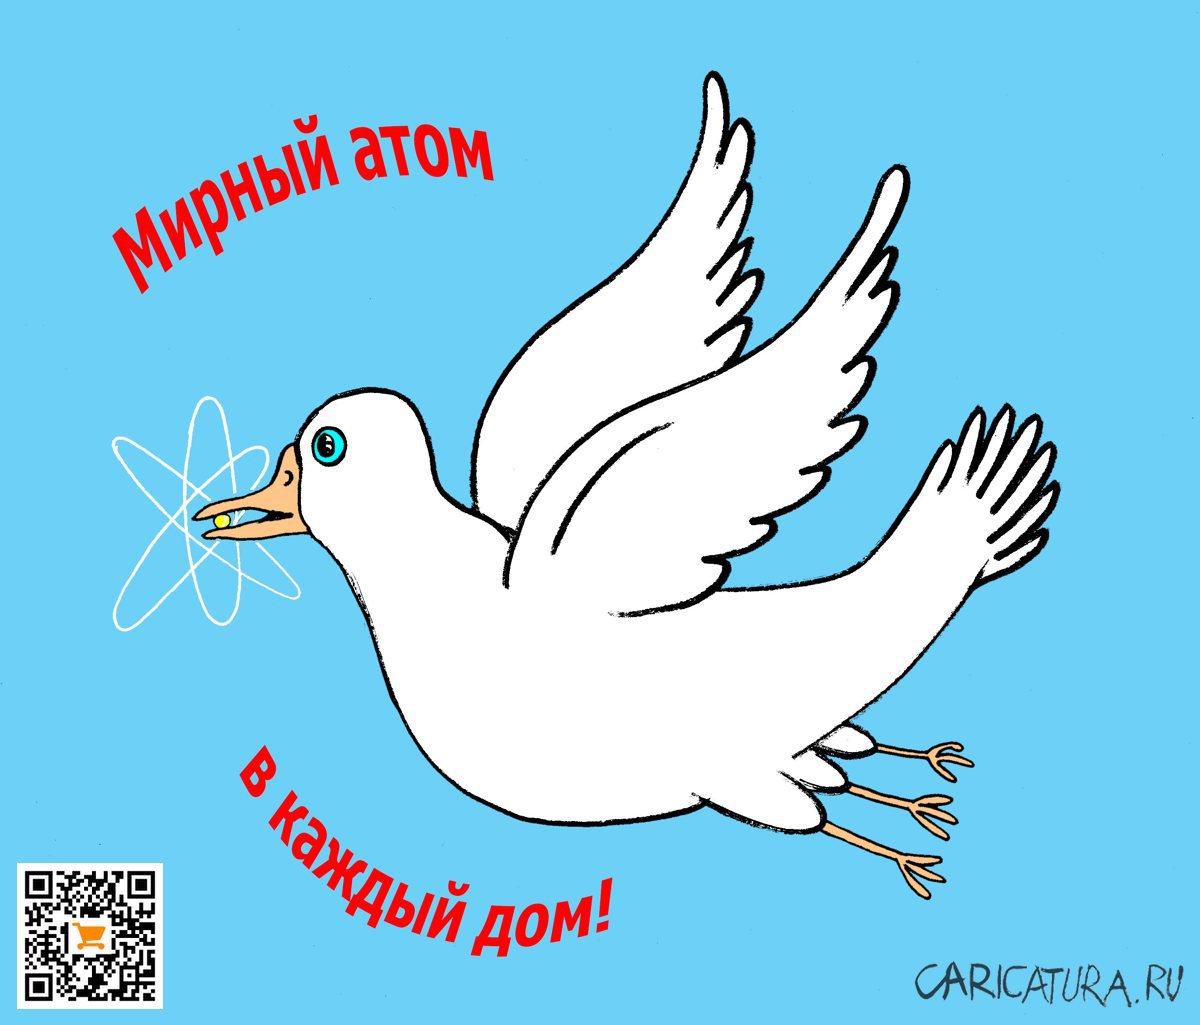 Карикатура "Мир дому твоему", Валерий Тарасенко